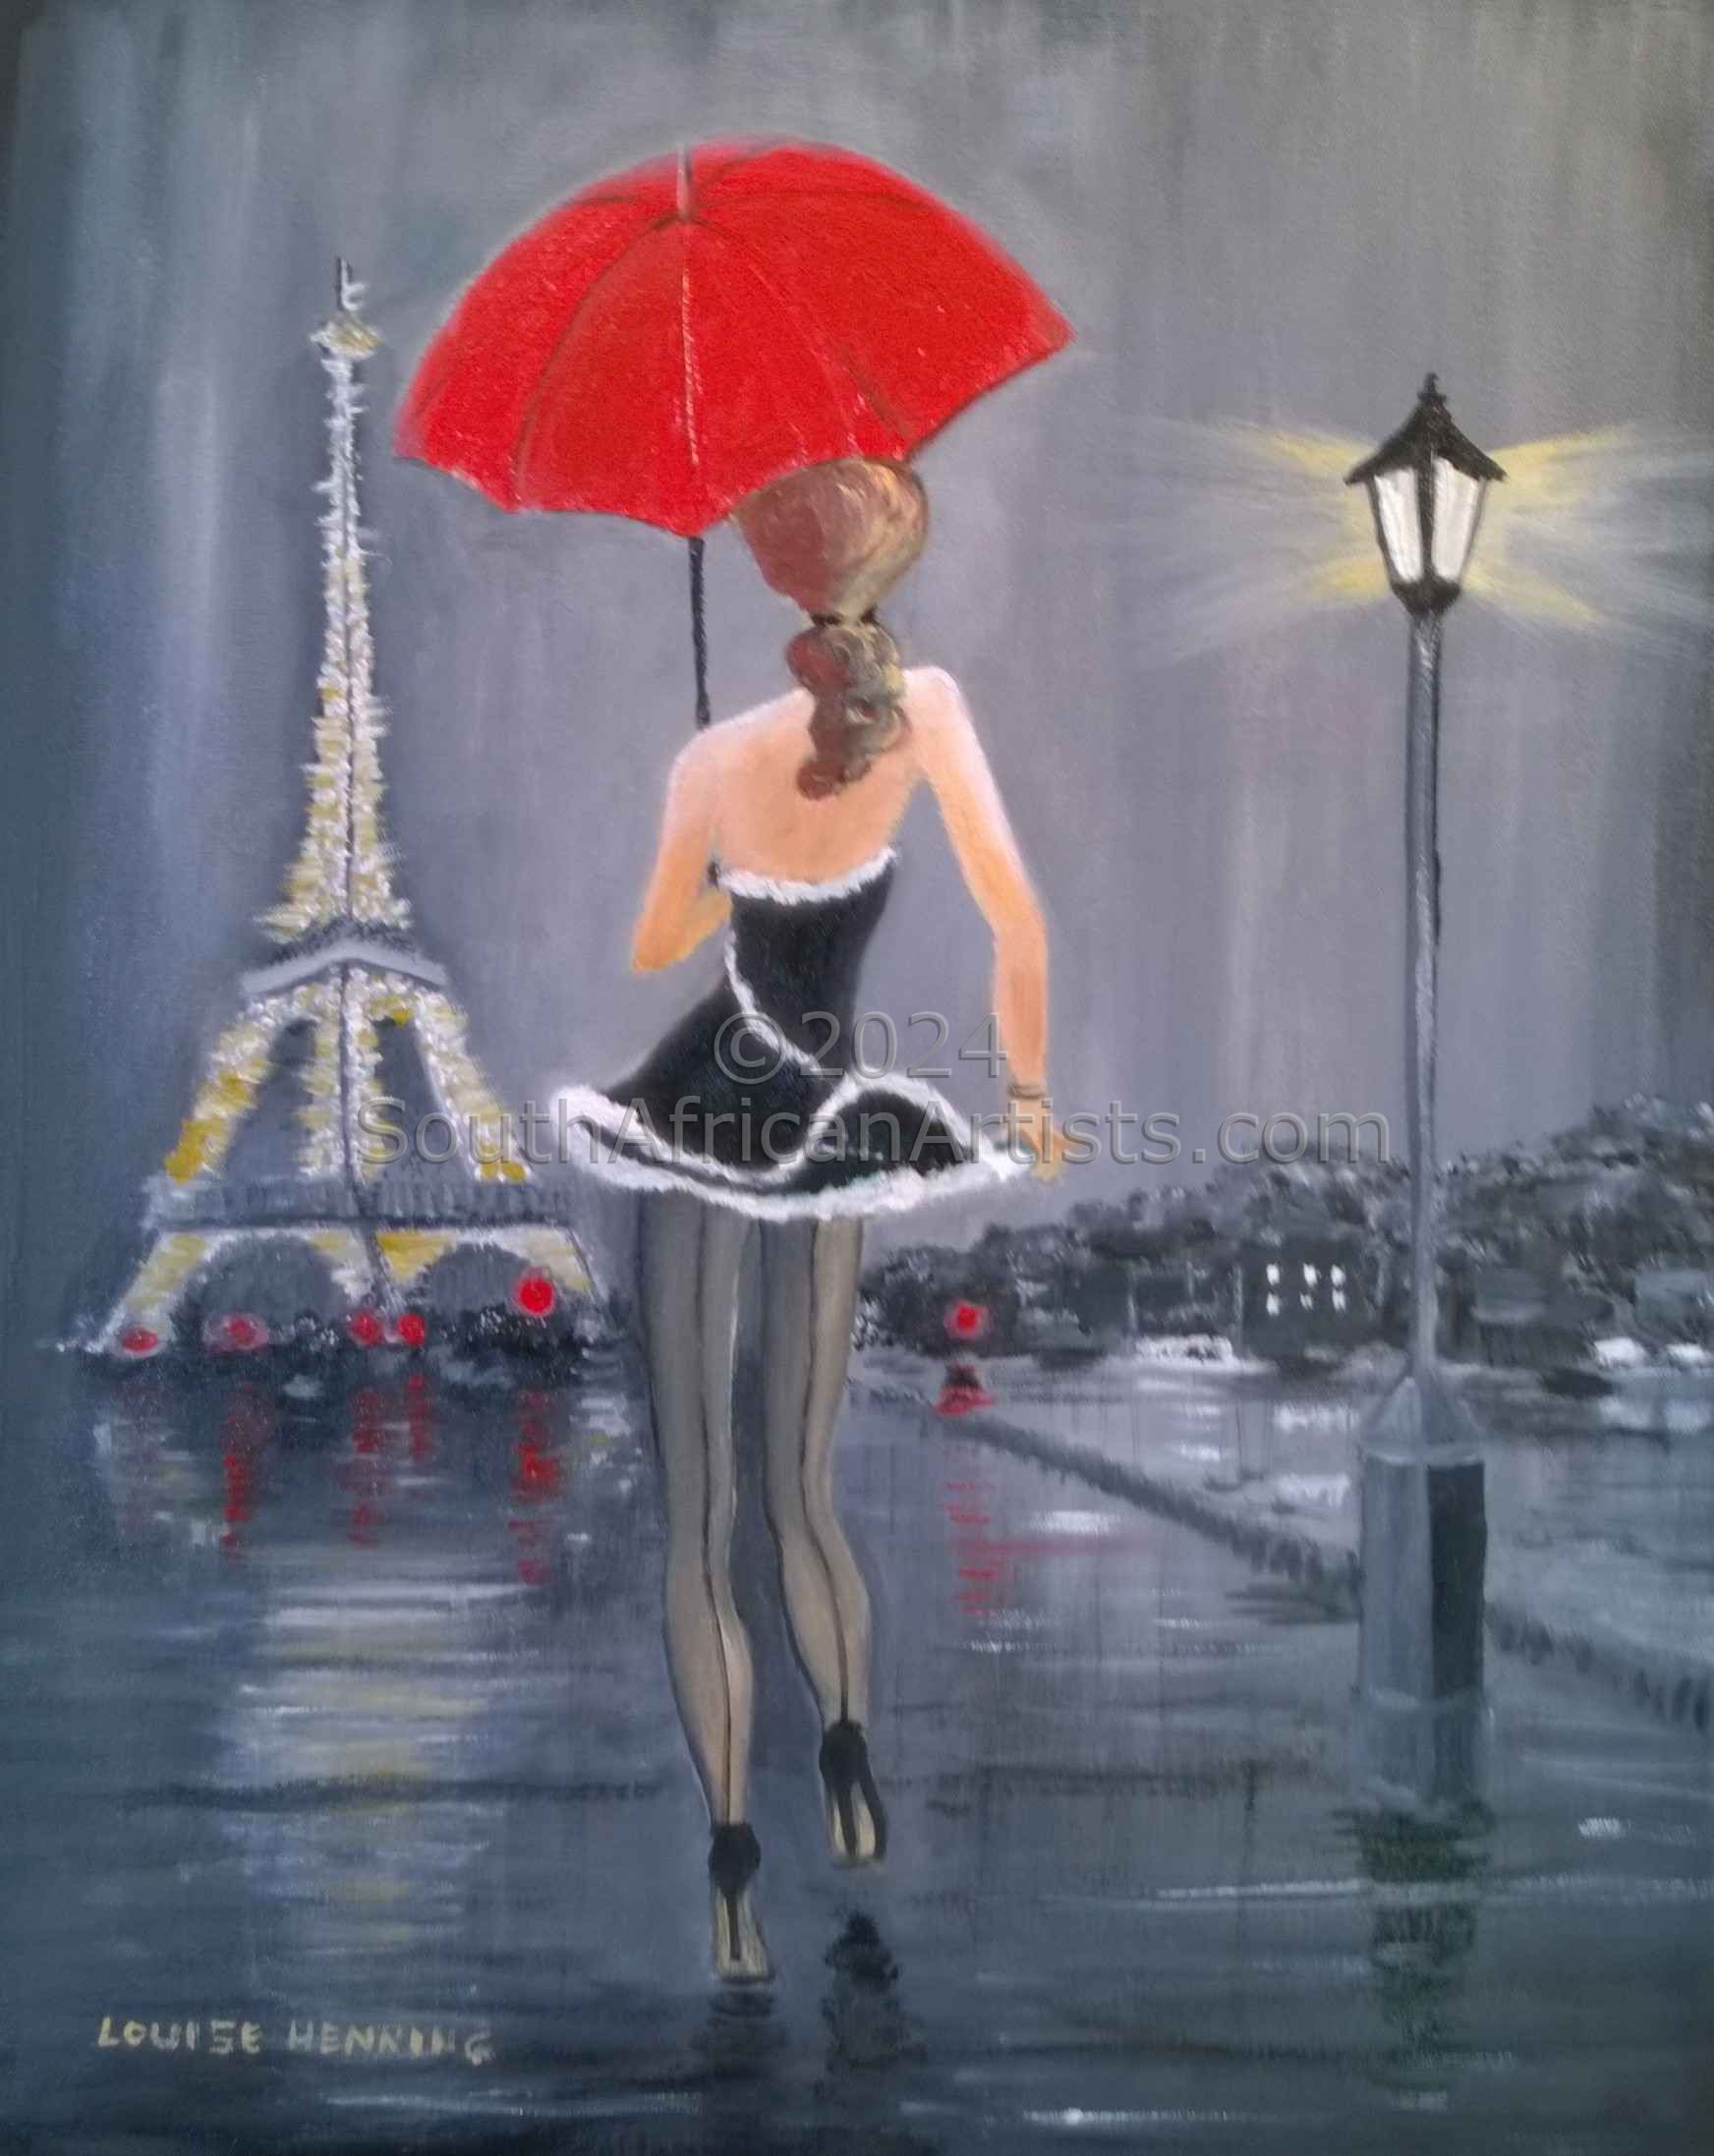 Rainy Day in Paris